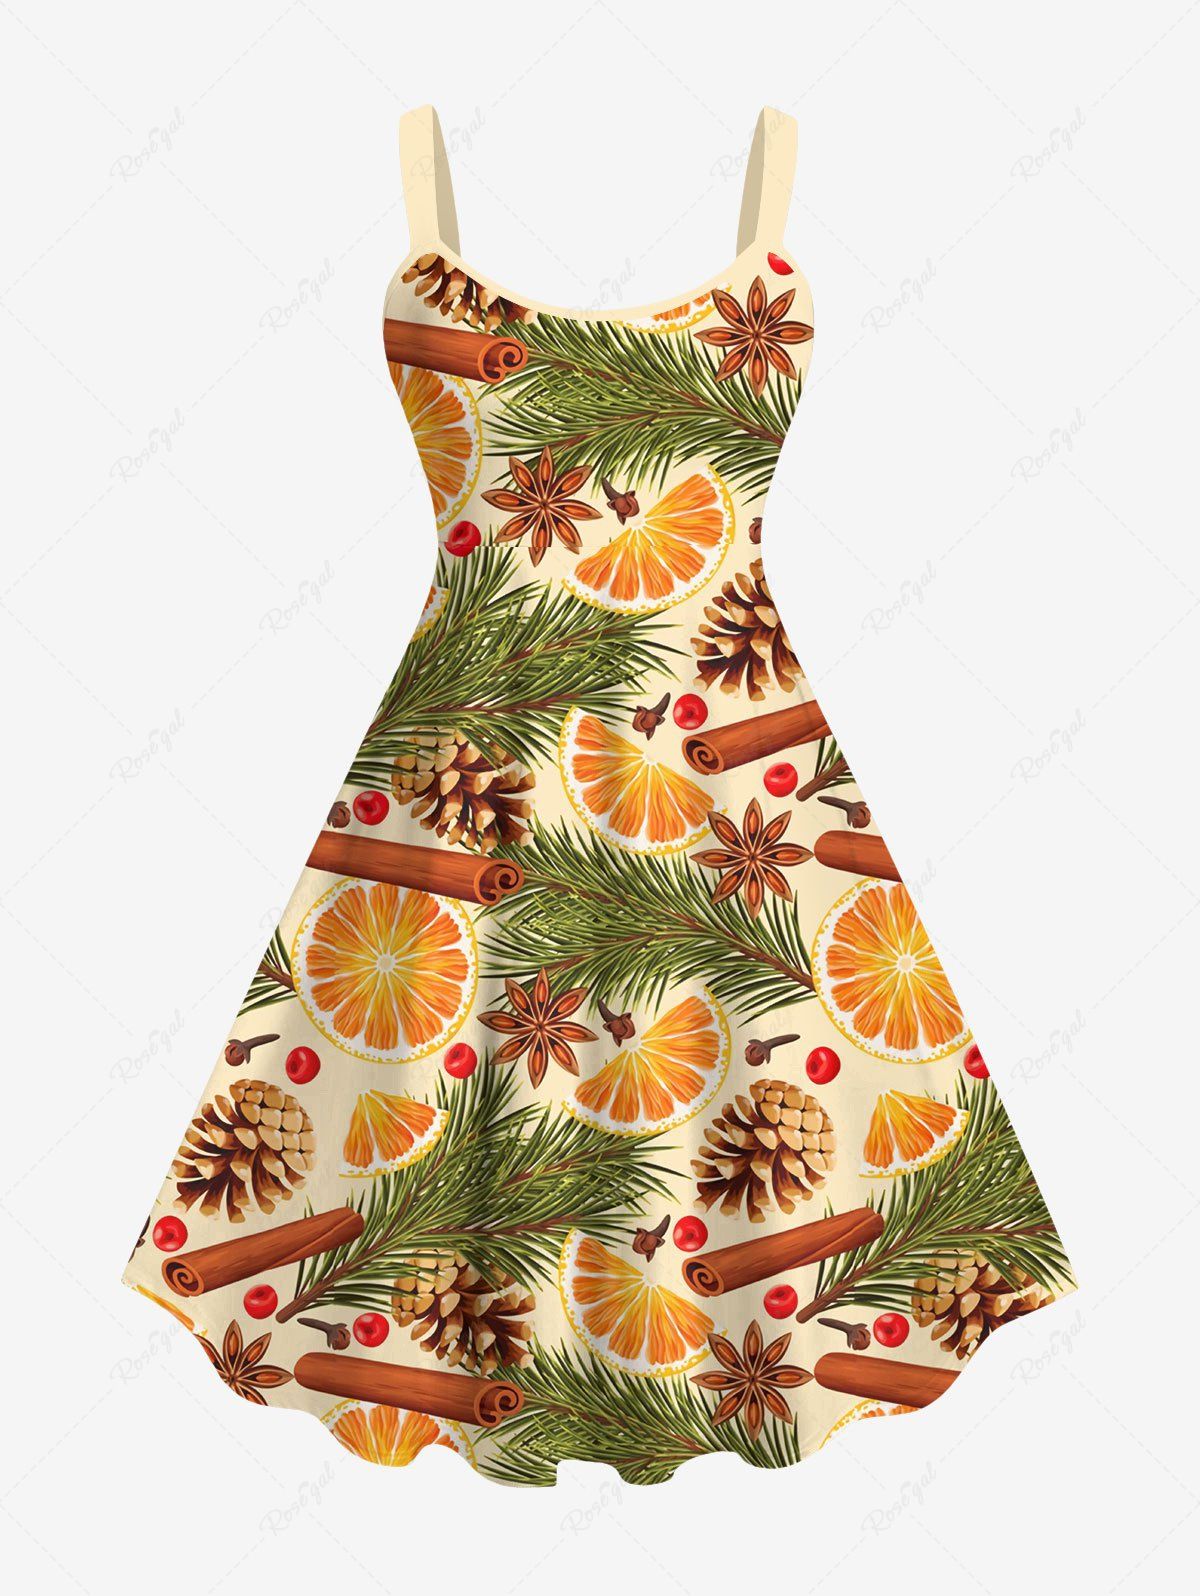 Outfits Hawaii Plus Size Orange Pine Nuts Needles Fruit Cinnamon Anise Print Tank Dress  